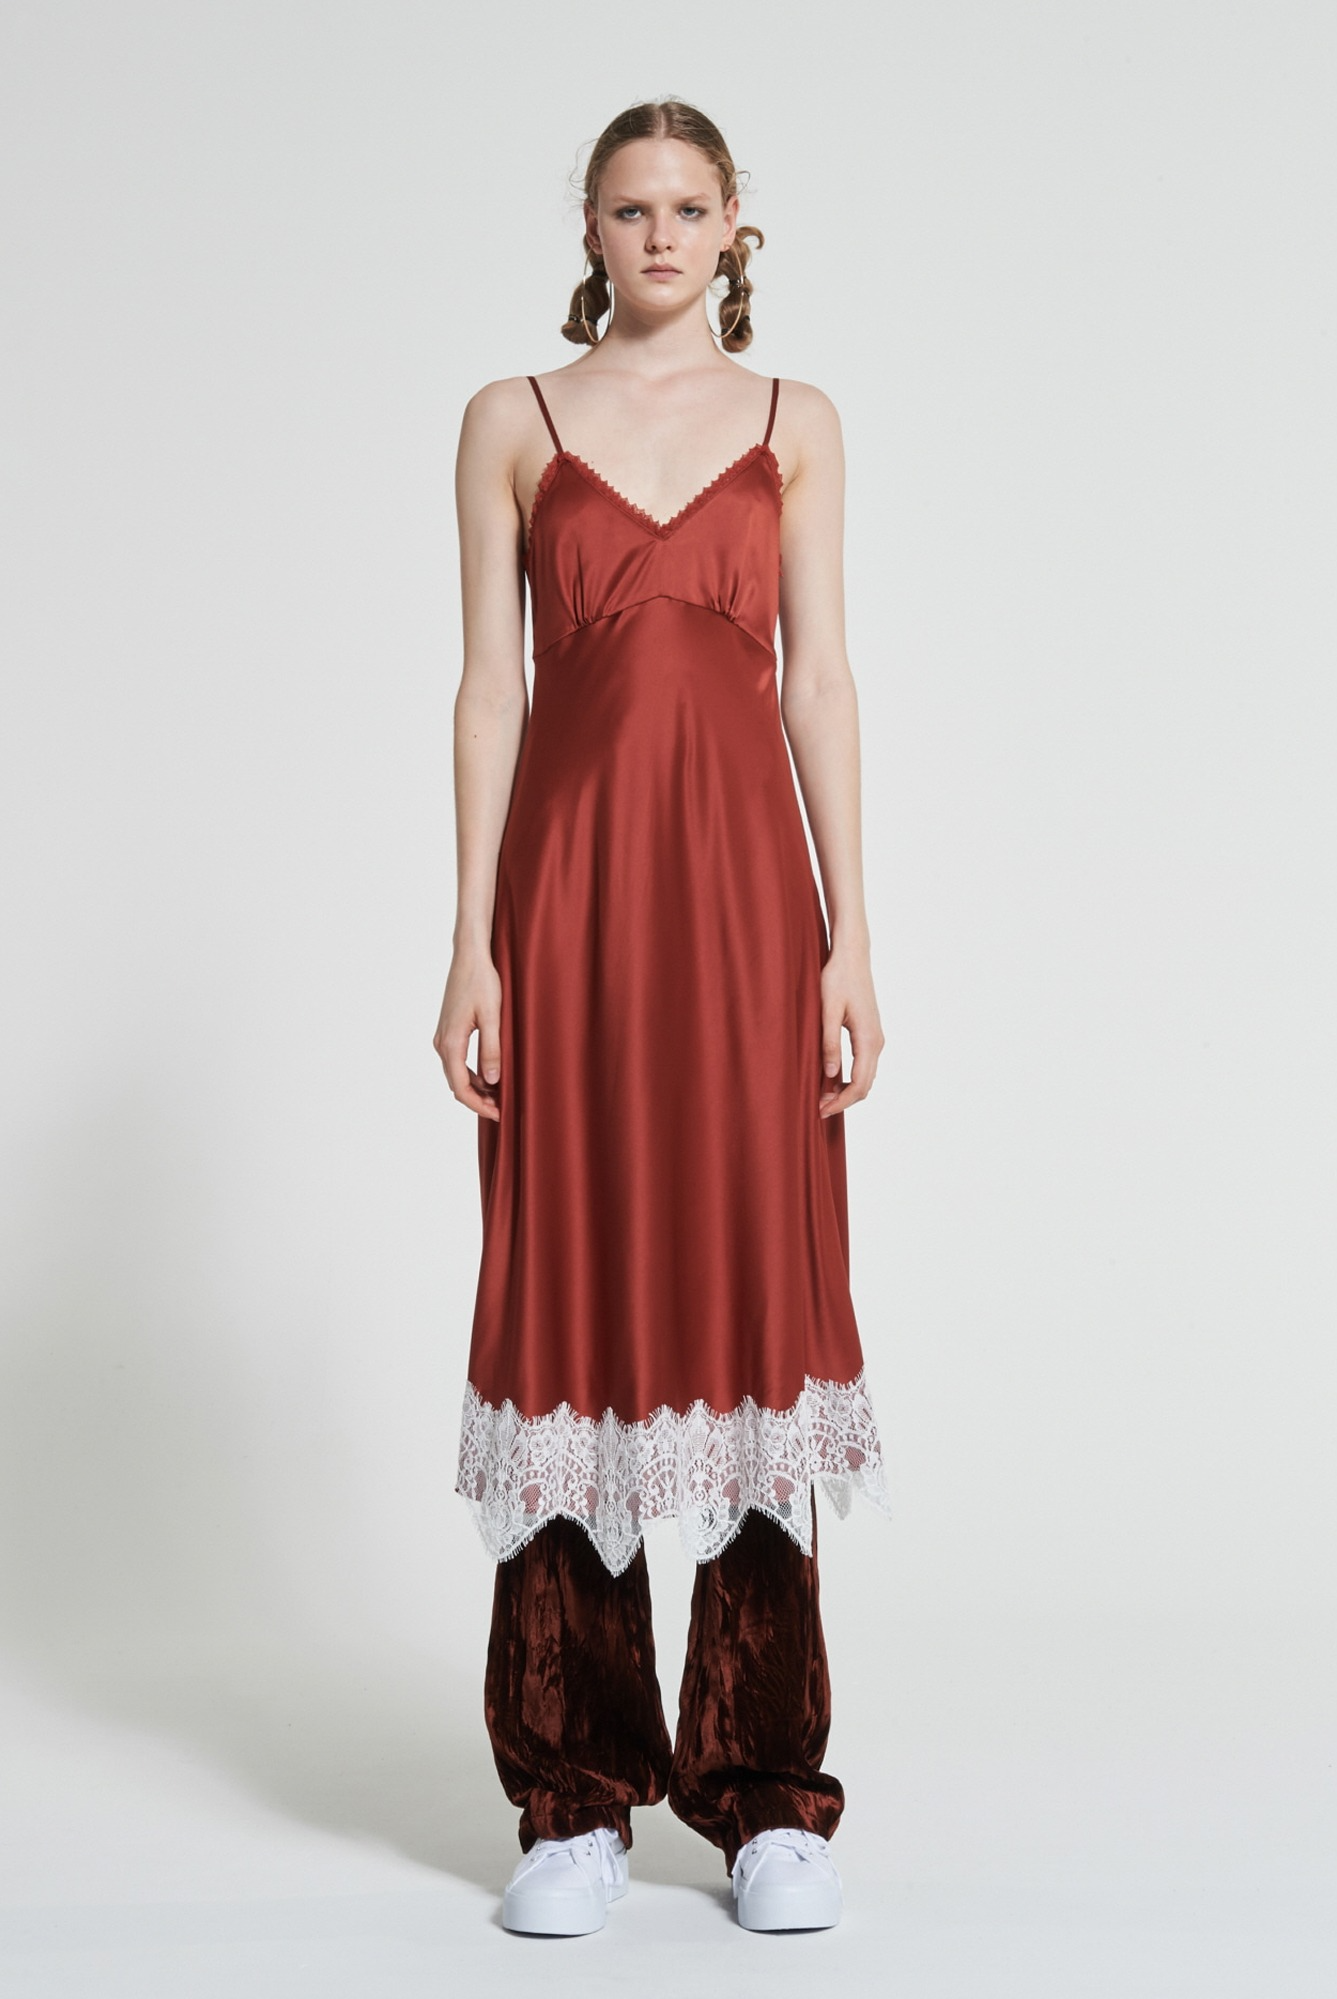 Lace Tremmed Sleeveless Dress